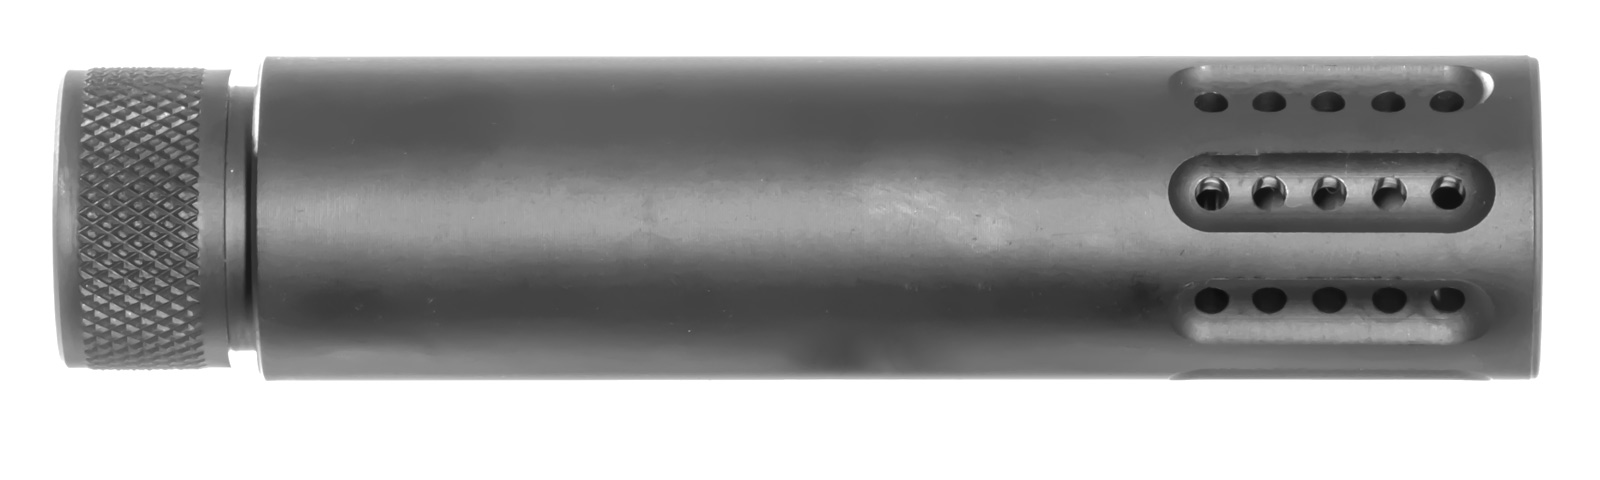 ar-barrel-shroud-308-slip-over-barrel-shroud-multi-port-muzzle-brake